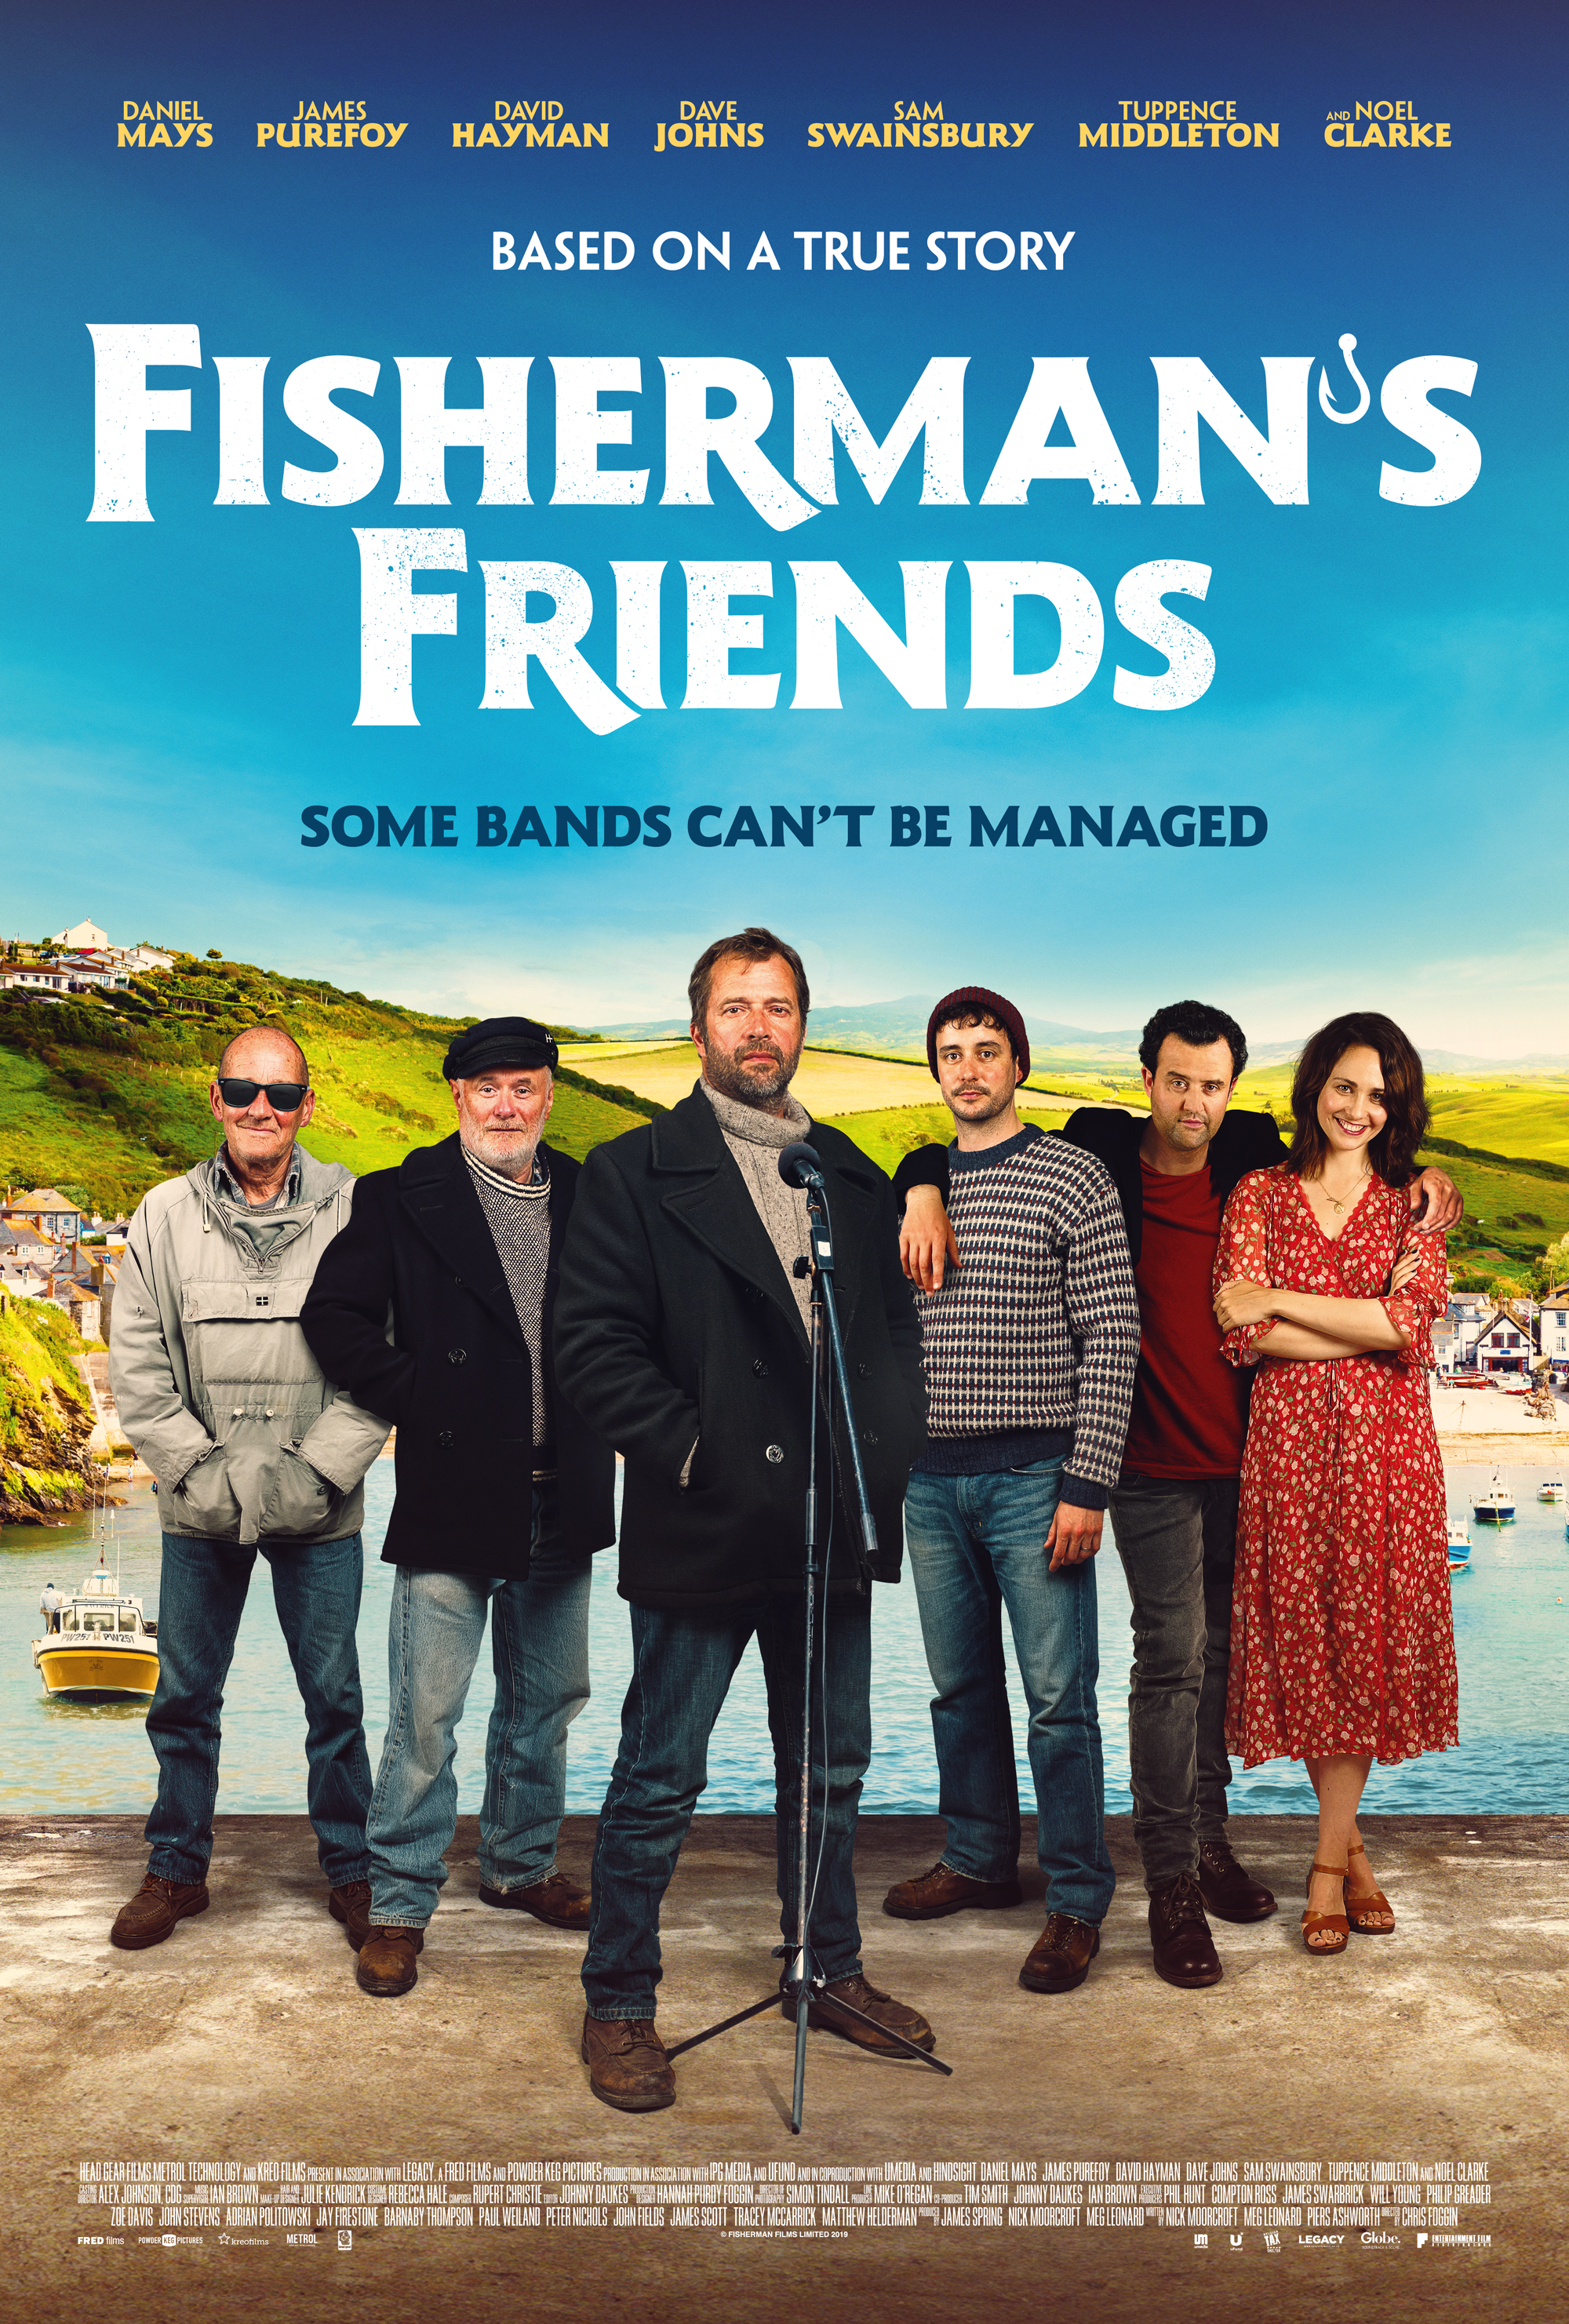 Nonton film Fisherman’s Friends layarkaca21 indoxx1 ganool online streaming terbaru